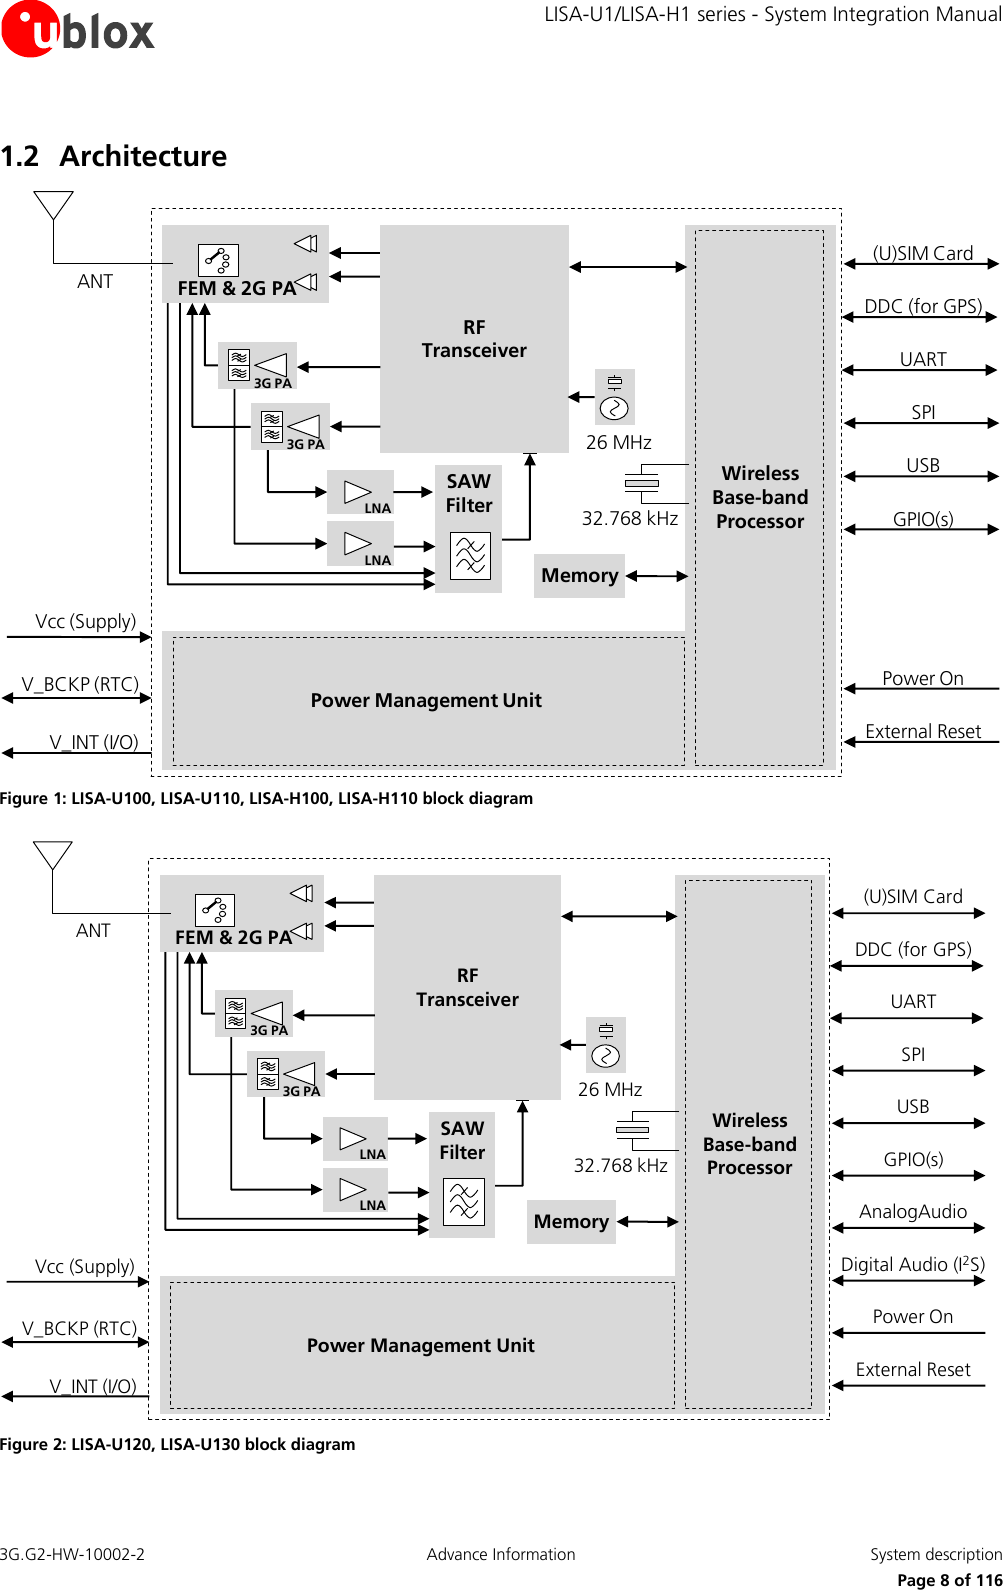     LISA-U1/LISA-H1 series - System Integration Manual 3G.G2-HW-10002-2  Advance Information  System description      Page 8 of 116 1.2 Architecture WirelessBase-bandProcessorMemoryPower Management UnitRF Transceiver26 MHz32.768 kHzSAWFilterFEM &amp; 2G PAANTLNA3G PALNA3G PADDC (for GPS)(U)SIM CardUARTSPIUSBGPIO(s)Power OnExternal ResetV_BCKP (RTC)Vcc (Supply)V_INT (I/O) Figure 1: LISA-U100, LISA-U110, LISA-H100, LISA-H110 block diagram WirelessBase-bandProcessorMemoryPower Management UnitRF Transceiver26 MHz32.768 kHzSAWFilterFEM &amp; 2G PAANTLNA3G PALNA3G PADDC (for GPS)(U)SIM CardUARTSPIUSBGPIO(s)Power OnExternal ResetV_BCKP (RTC)Vcc (Supply)V_INT (I/O)Digital Audio (I2S)AnalogAudio Figure 2: LISA-U120, LISA-U130 block diagram 